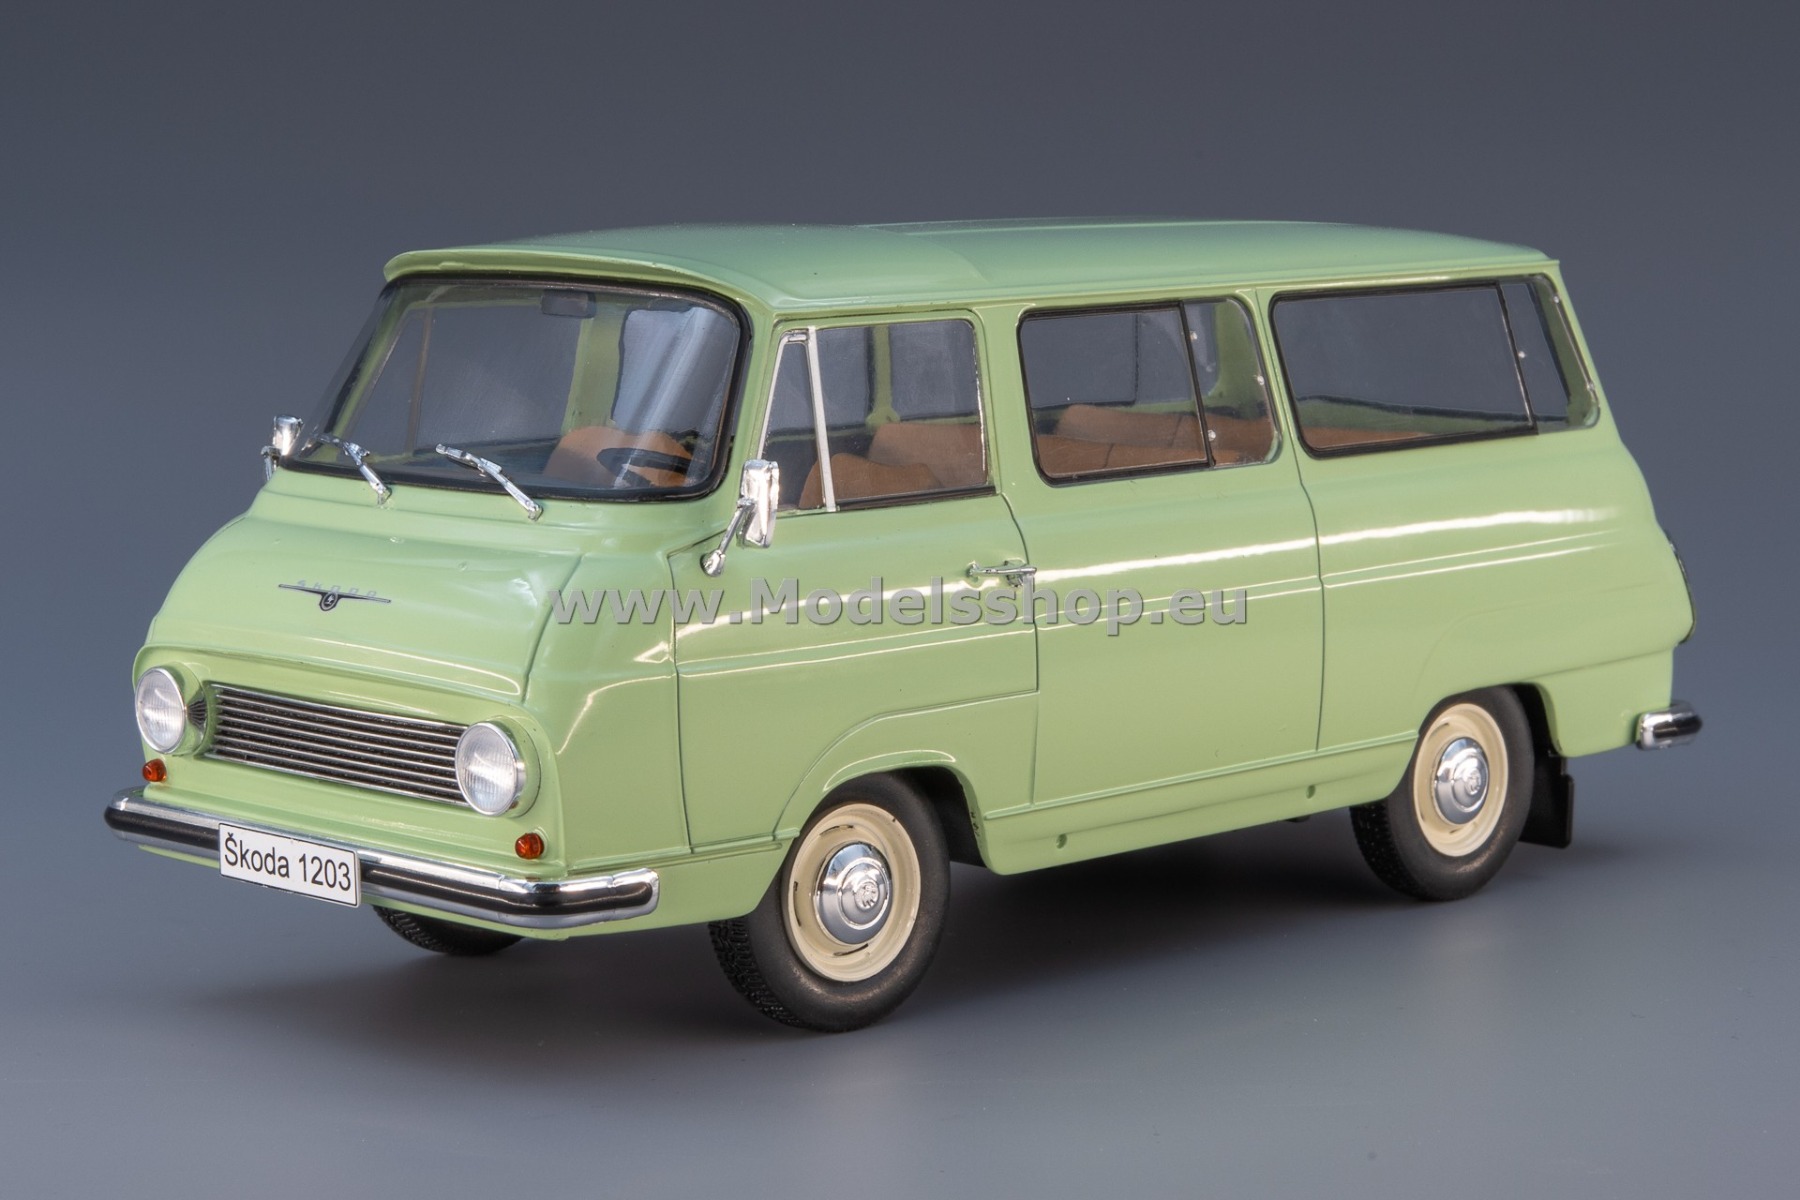 WhiteBox WB124176 Skoda 1203 minivan, 1968 /light green/